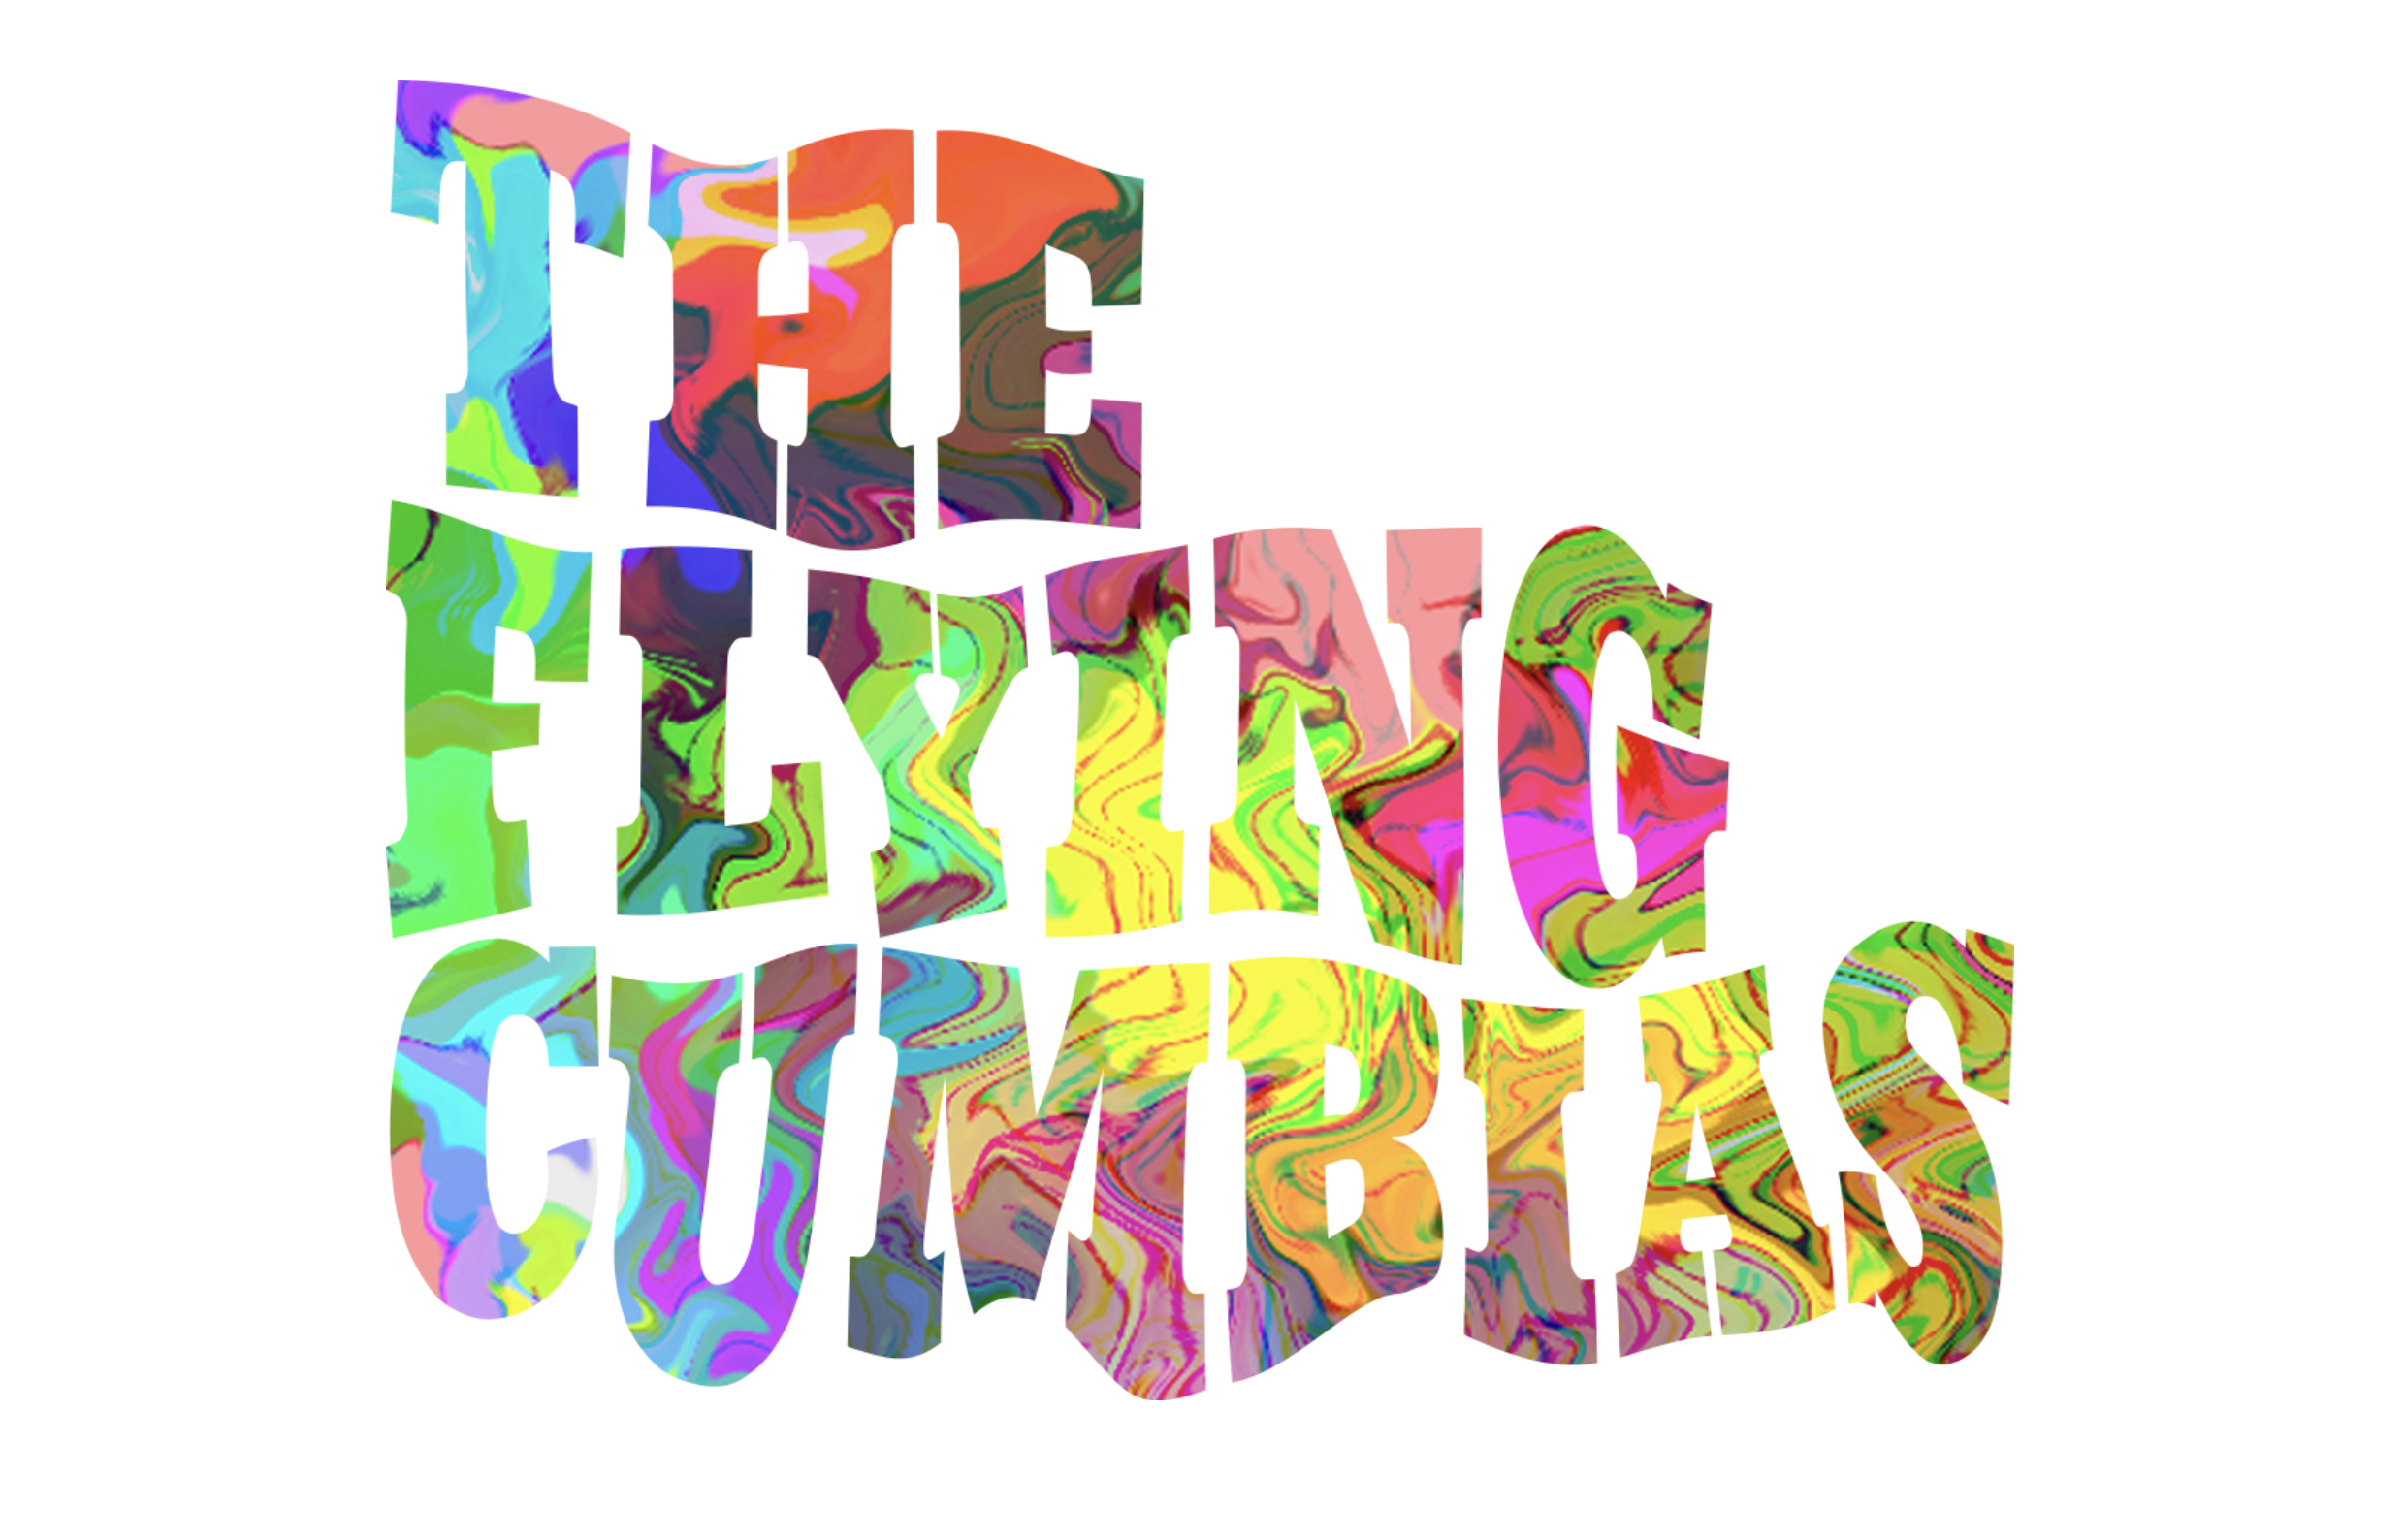 The Flying Cumbias